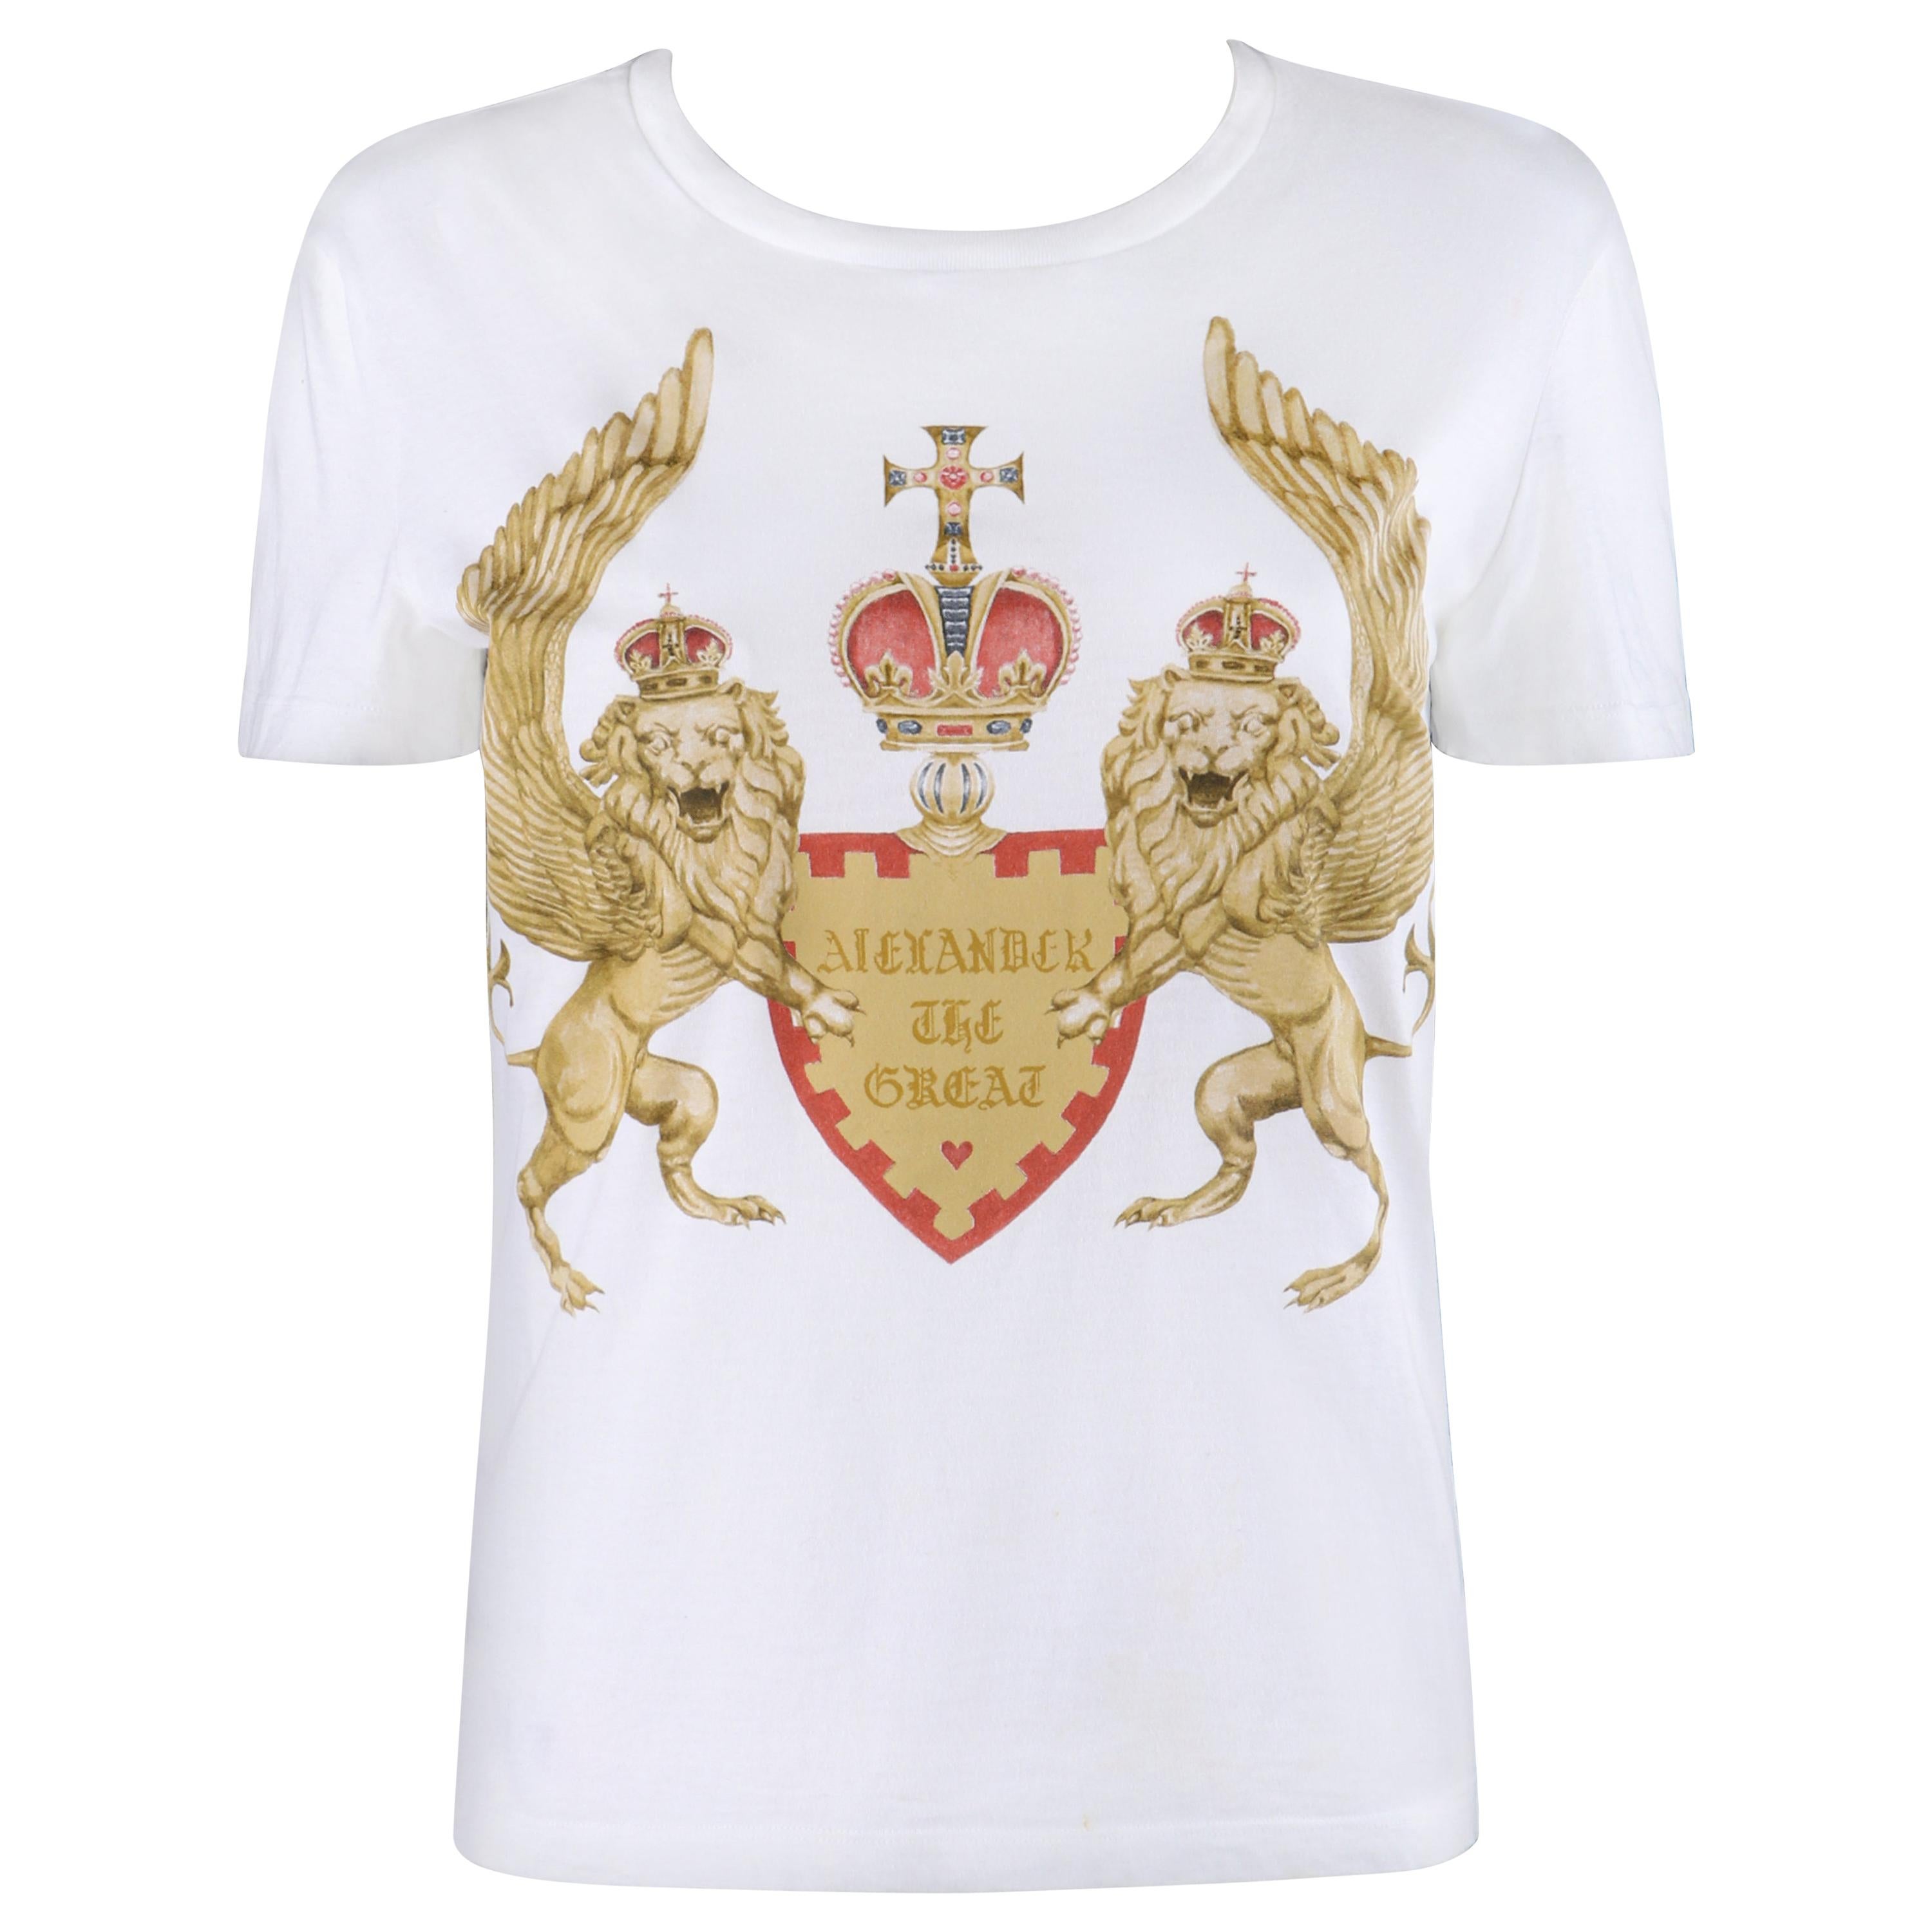 ALEXANDER McQUEEN F/W 2010 White Gold "Alexander the Great" Lion Print T-Shirt